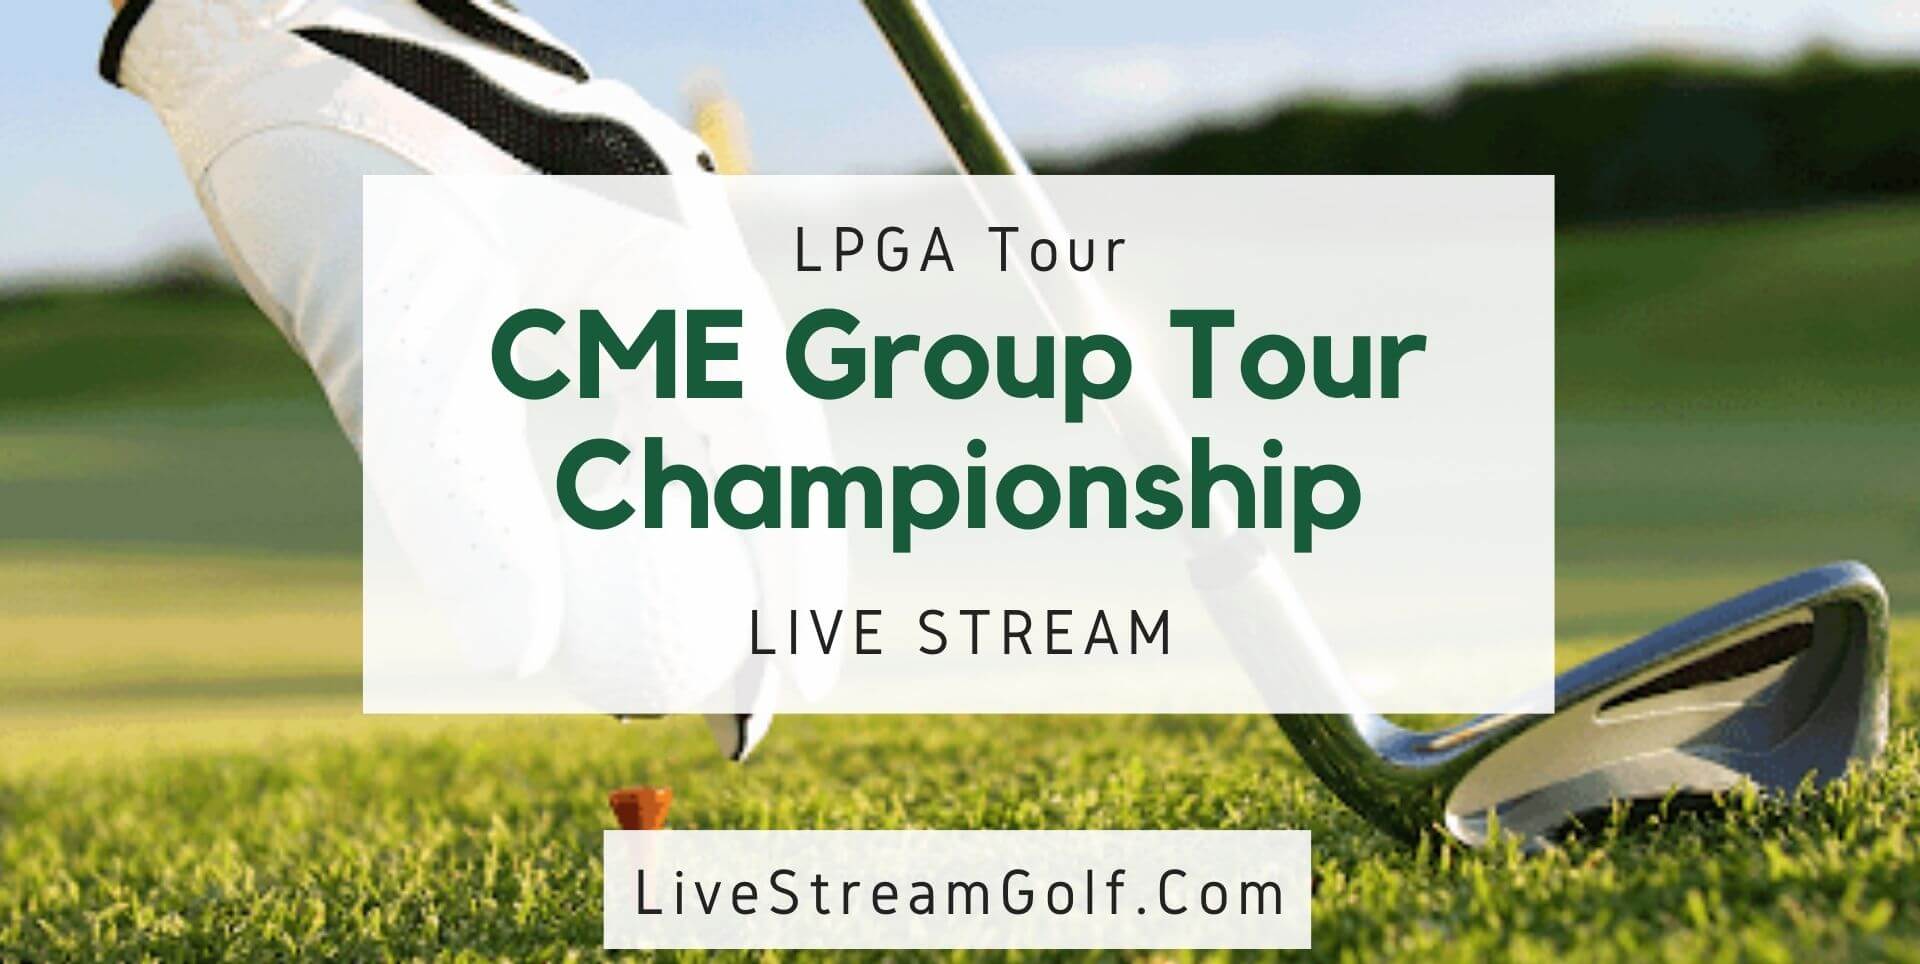 CME Group Tour Championship Day 3 Live Stream: LPGA Tour 2022